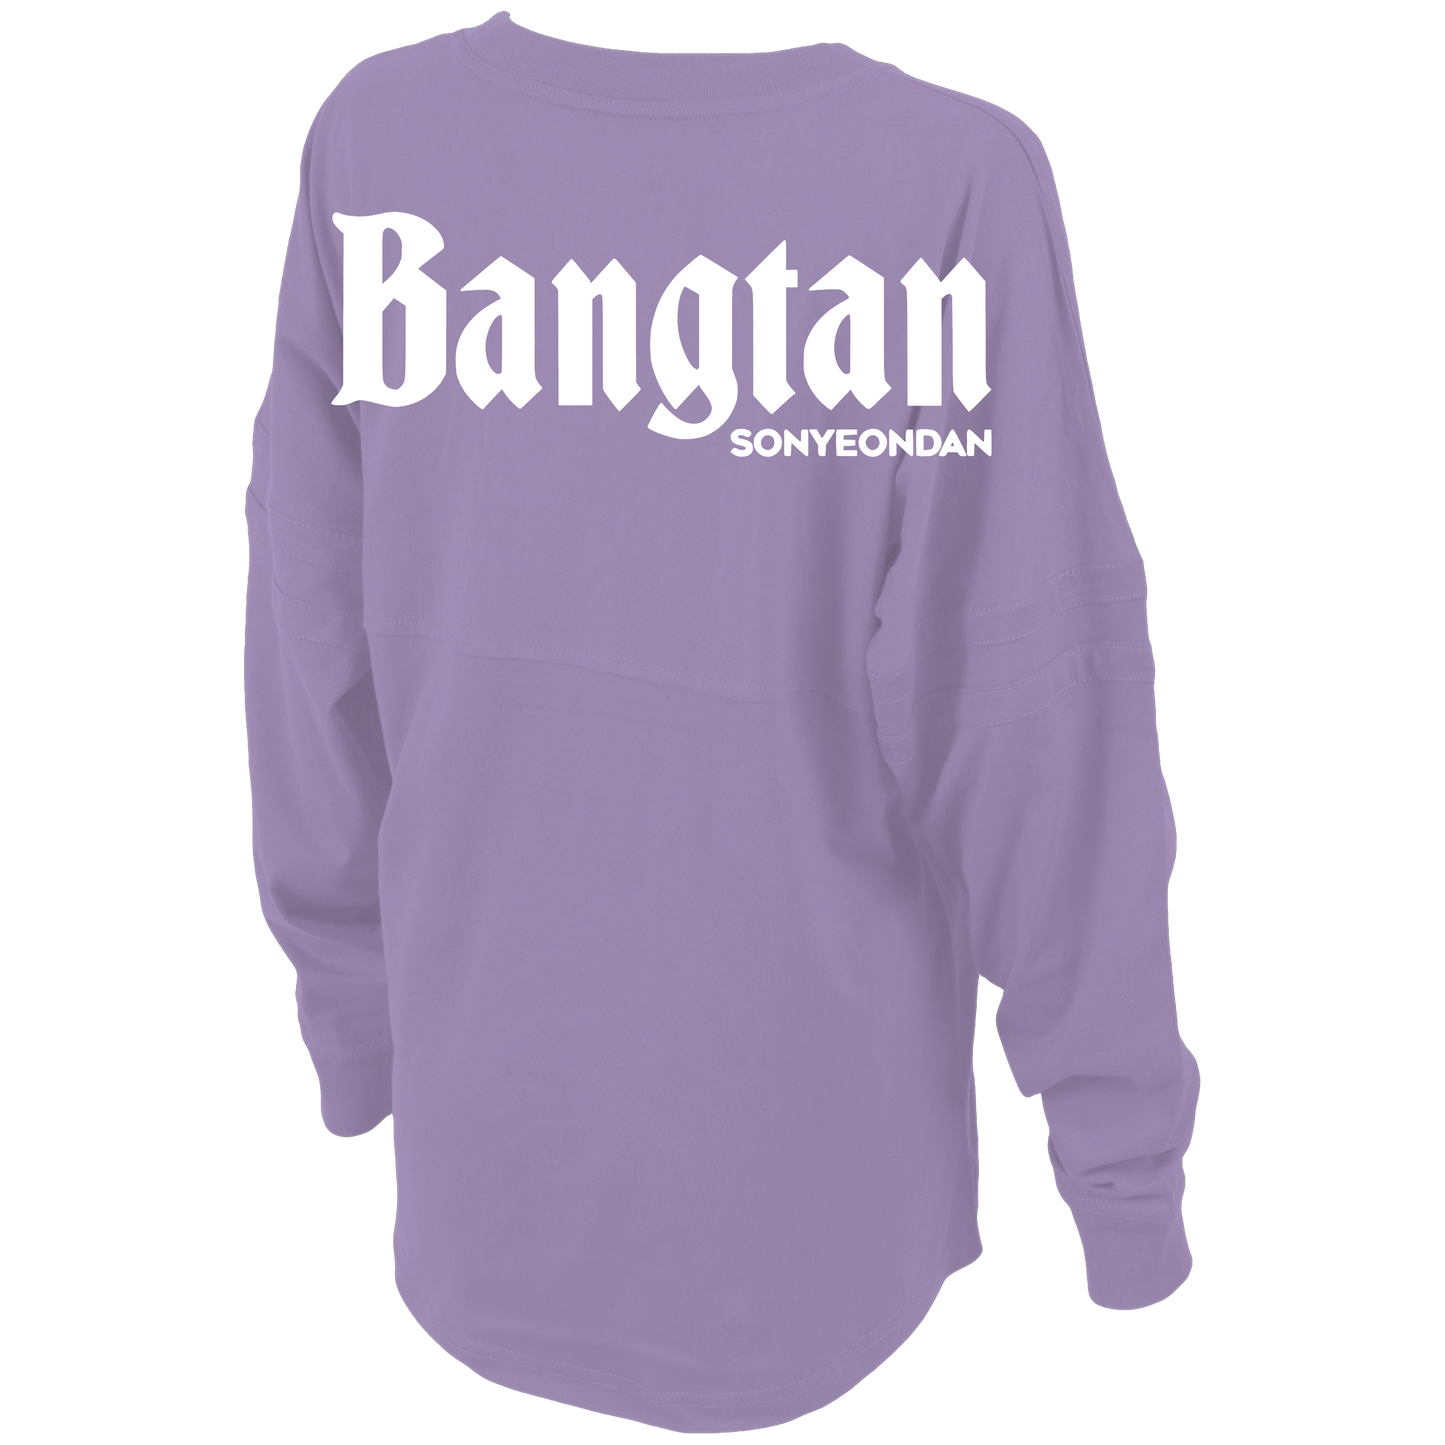 Classic Purple Bangtan Jersey RTS